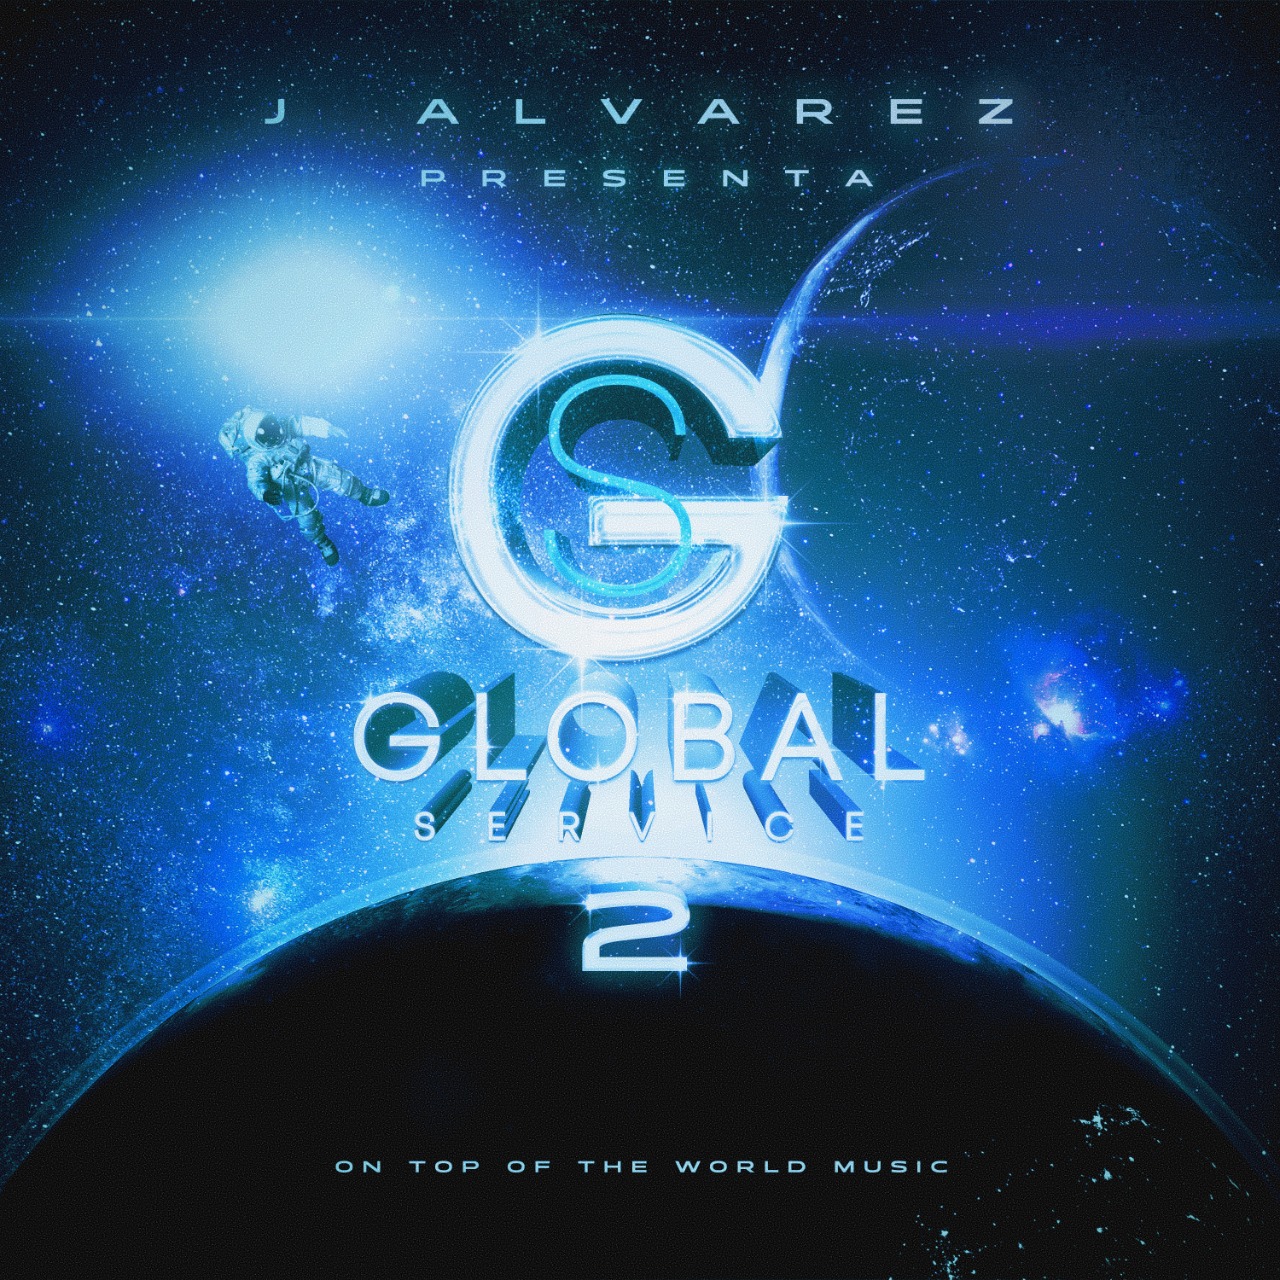 On Top Of The World Music presenta «Global Service 2», producido por J Álvarez